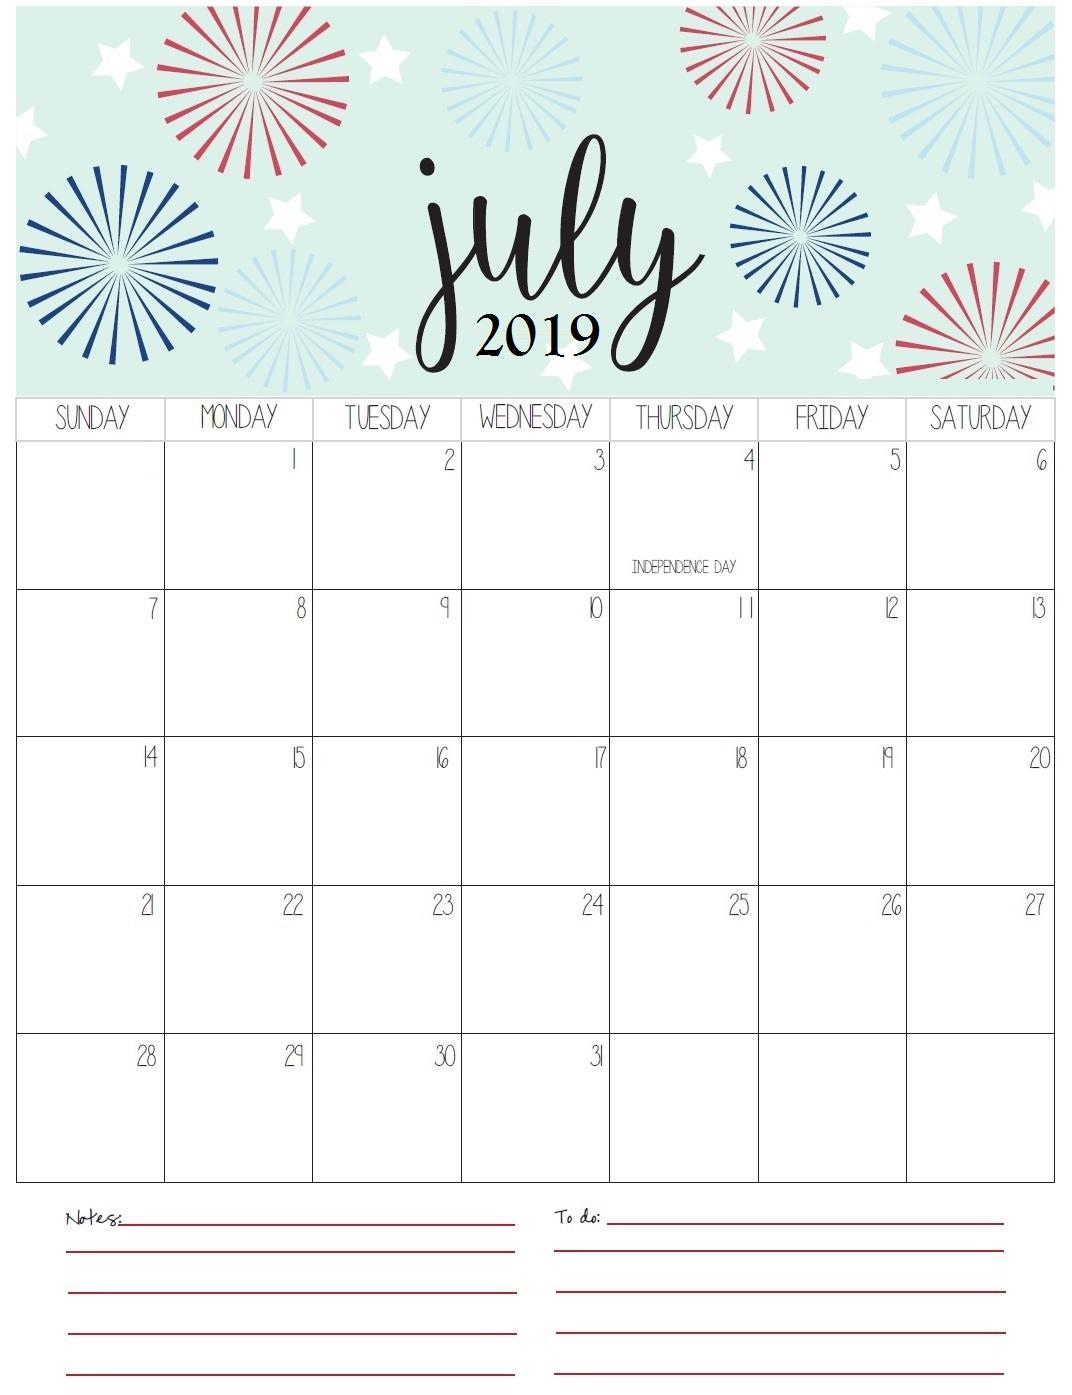 July 2019 Calendar Printable With Holidays